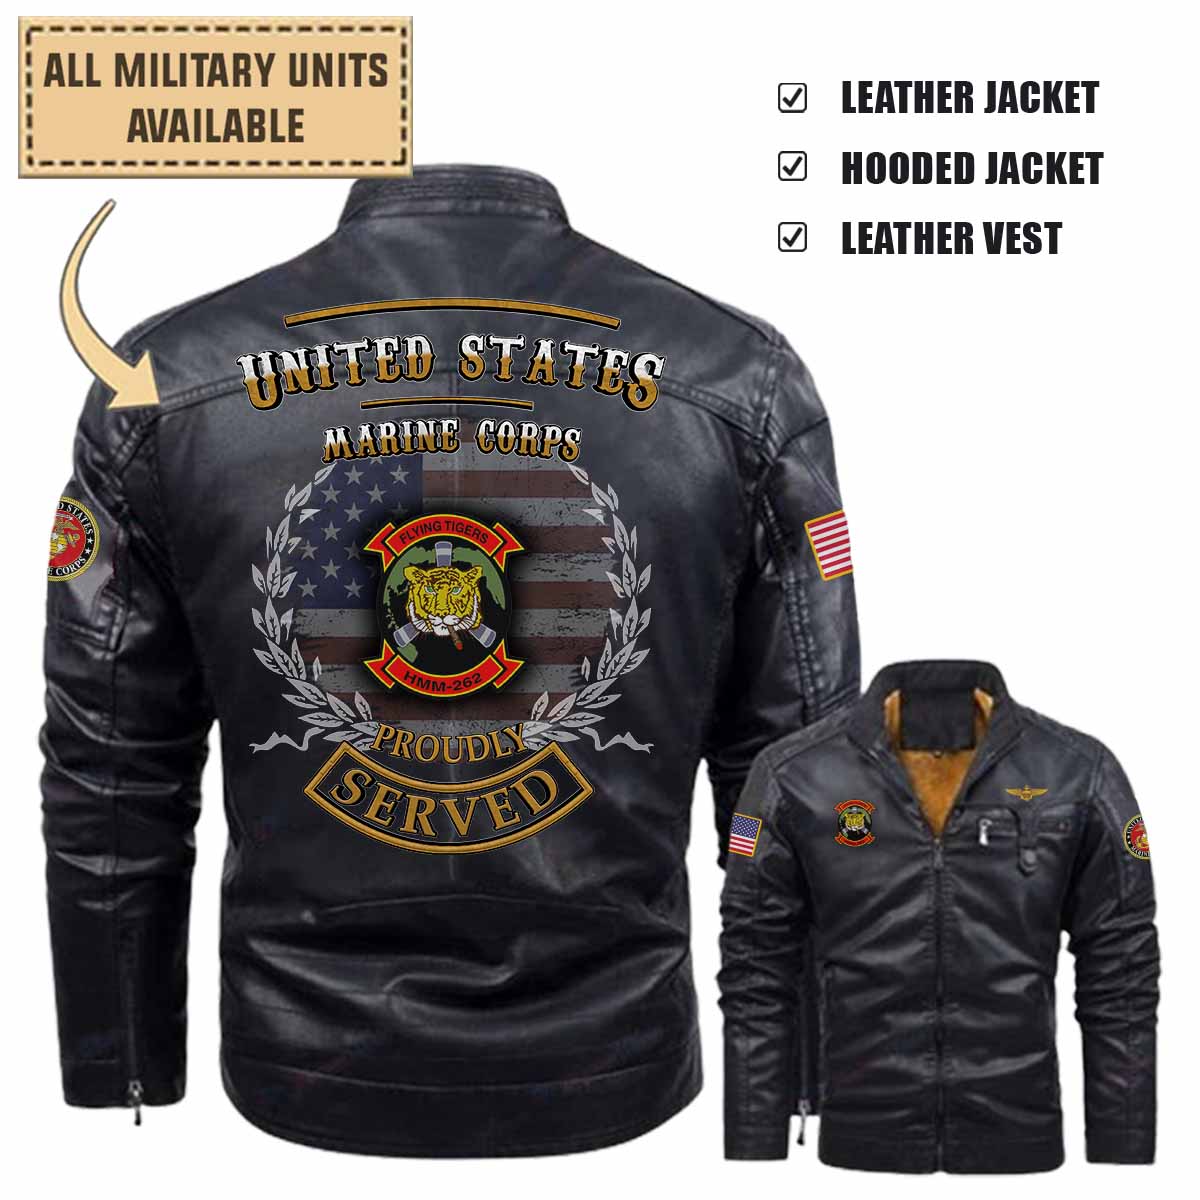 vmm 262 flying tigersleather jacket and vest